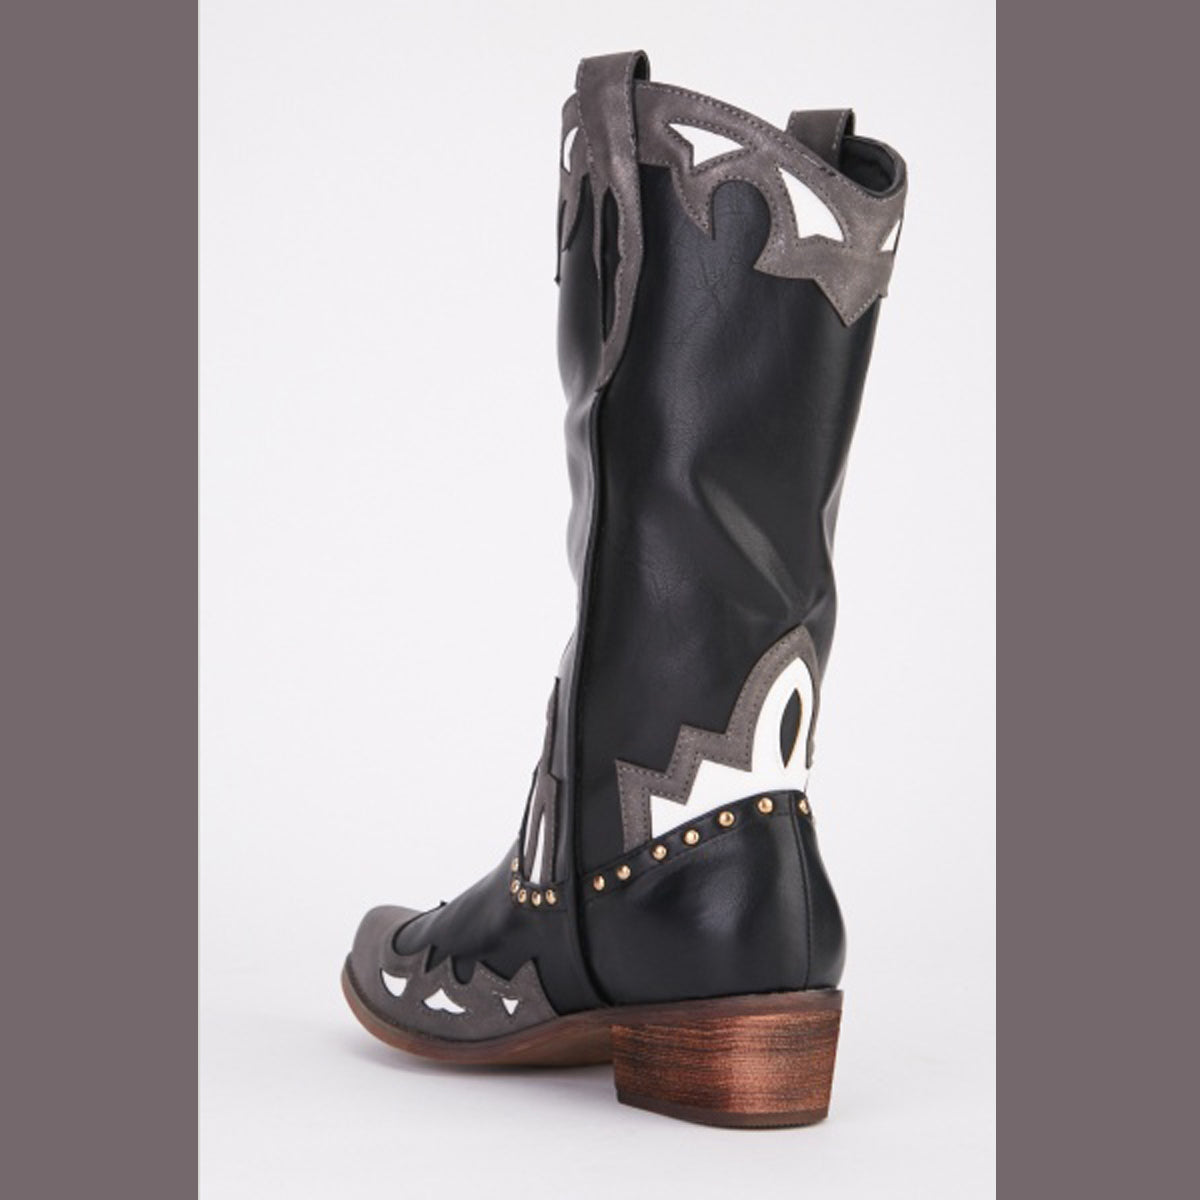 Black Grey Cowboy / Western Boots Flat Heel Upper Calf Length